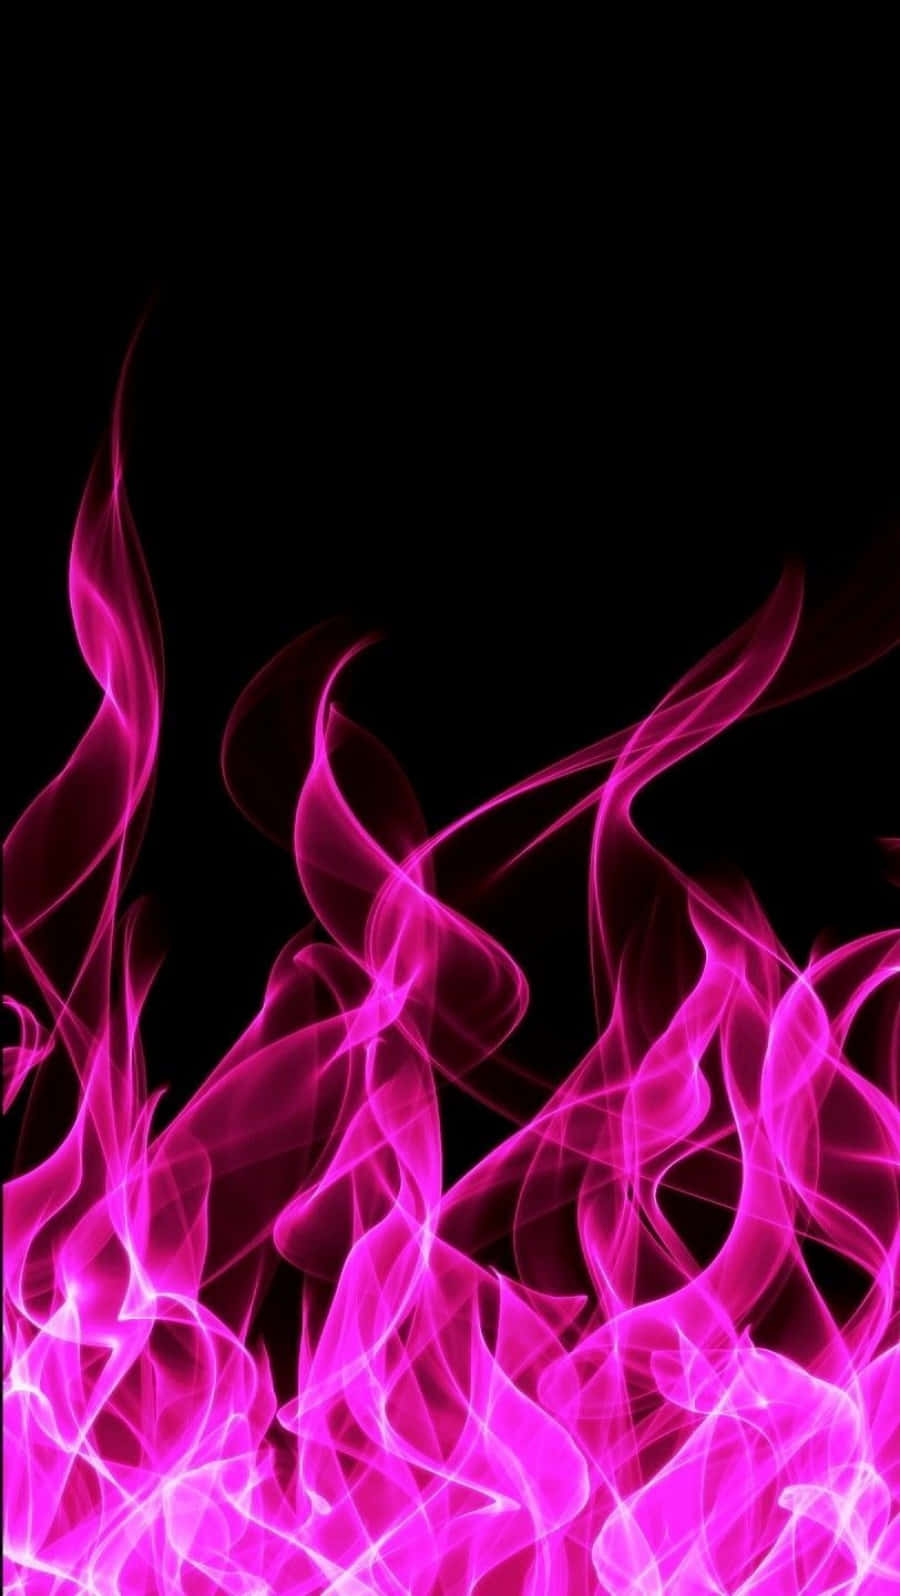 Free Aesthetic Dark Pink Wallpaper Downloads, [100+] Aesthetic Dark Pink  Wallpapers for FREE 